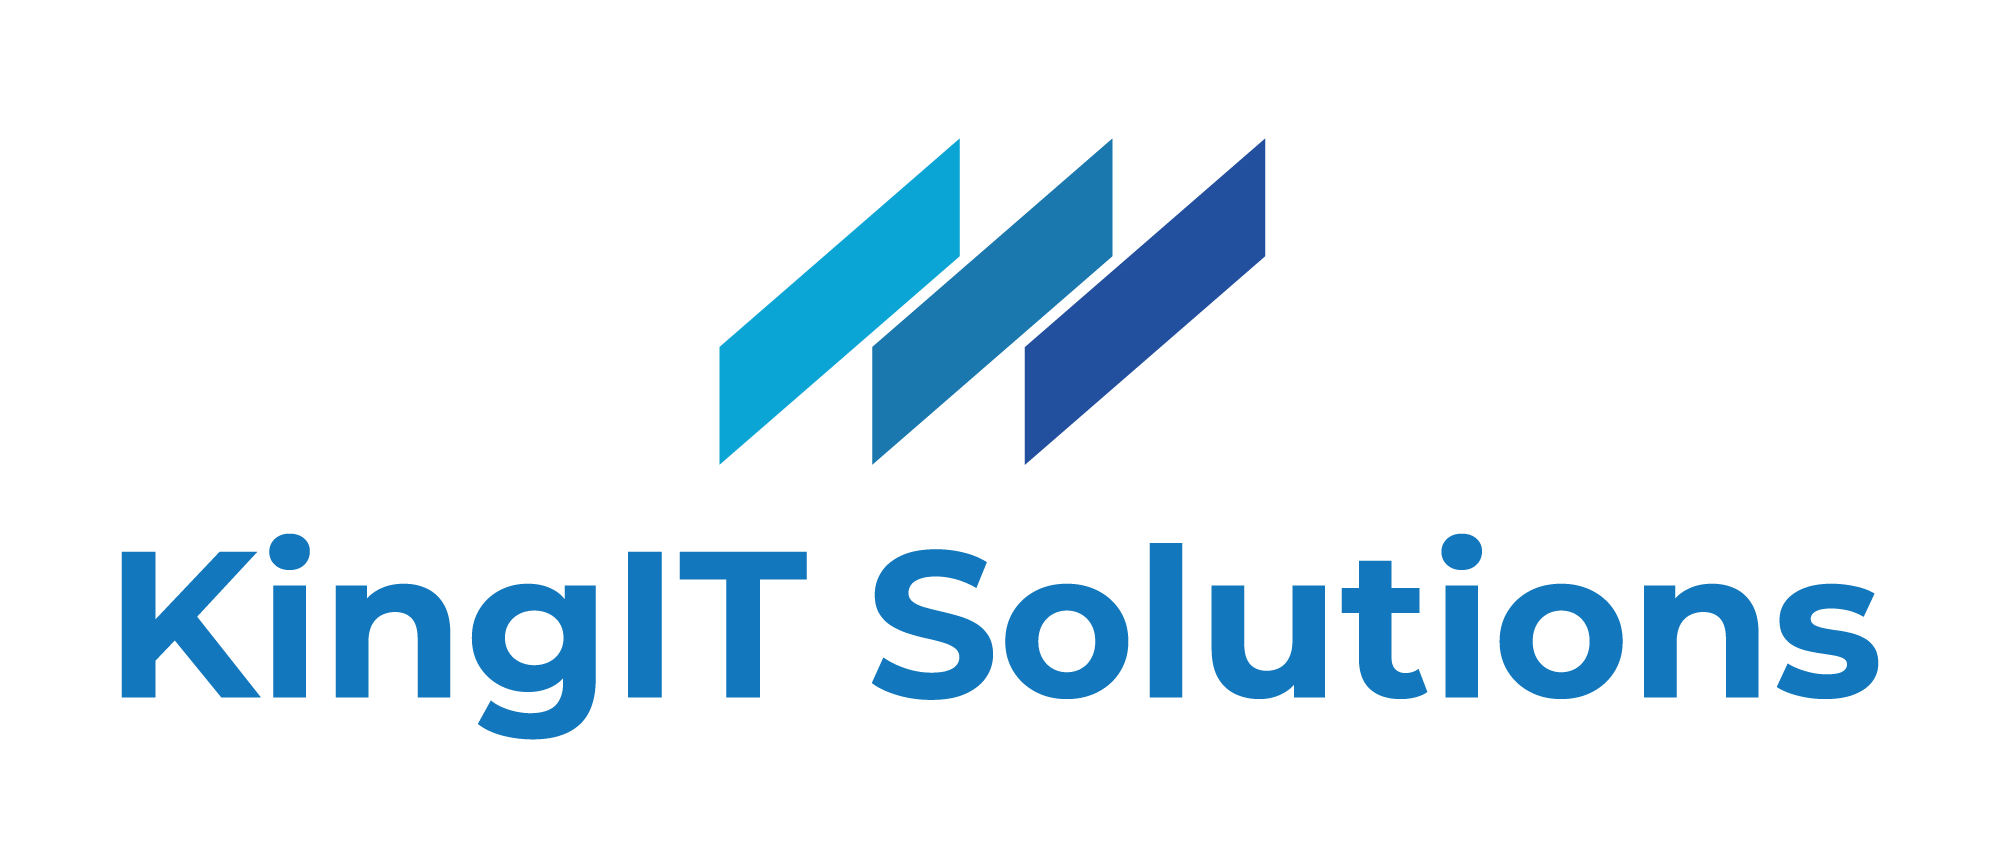 KingIT Solutions